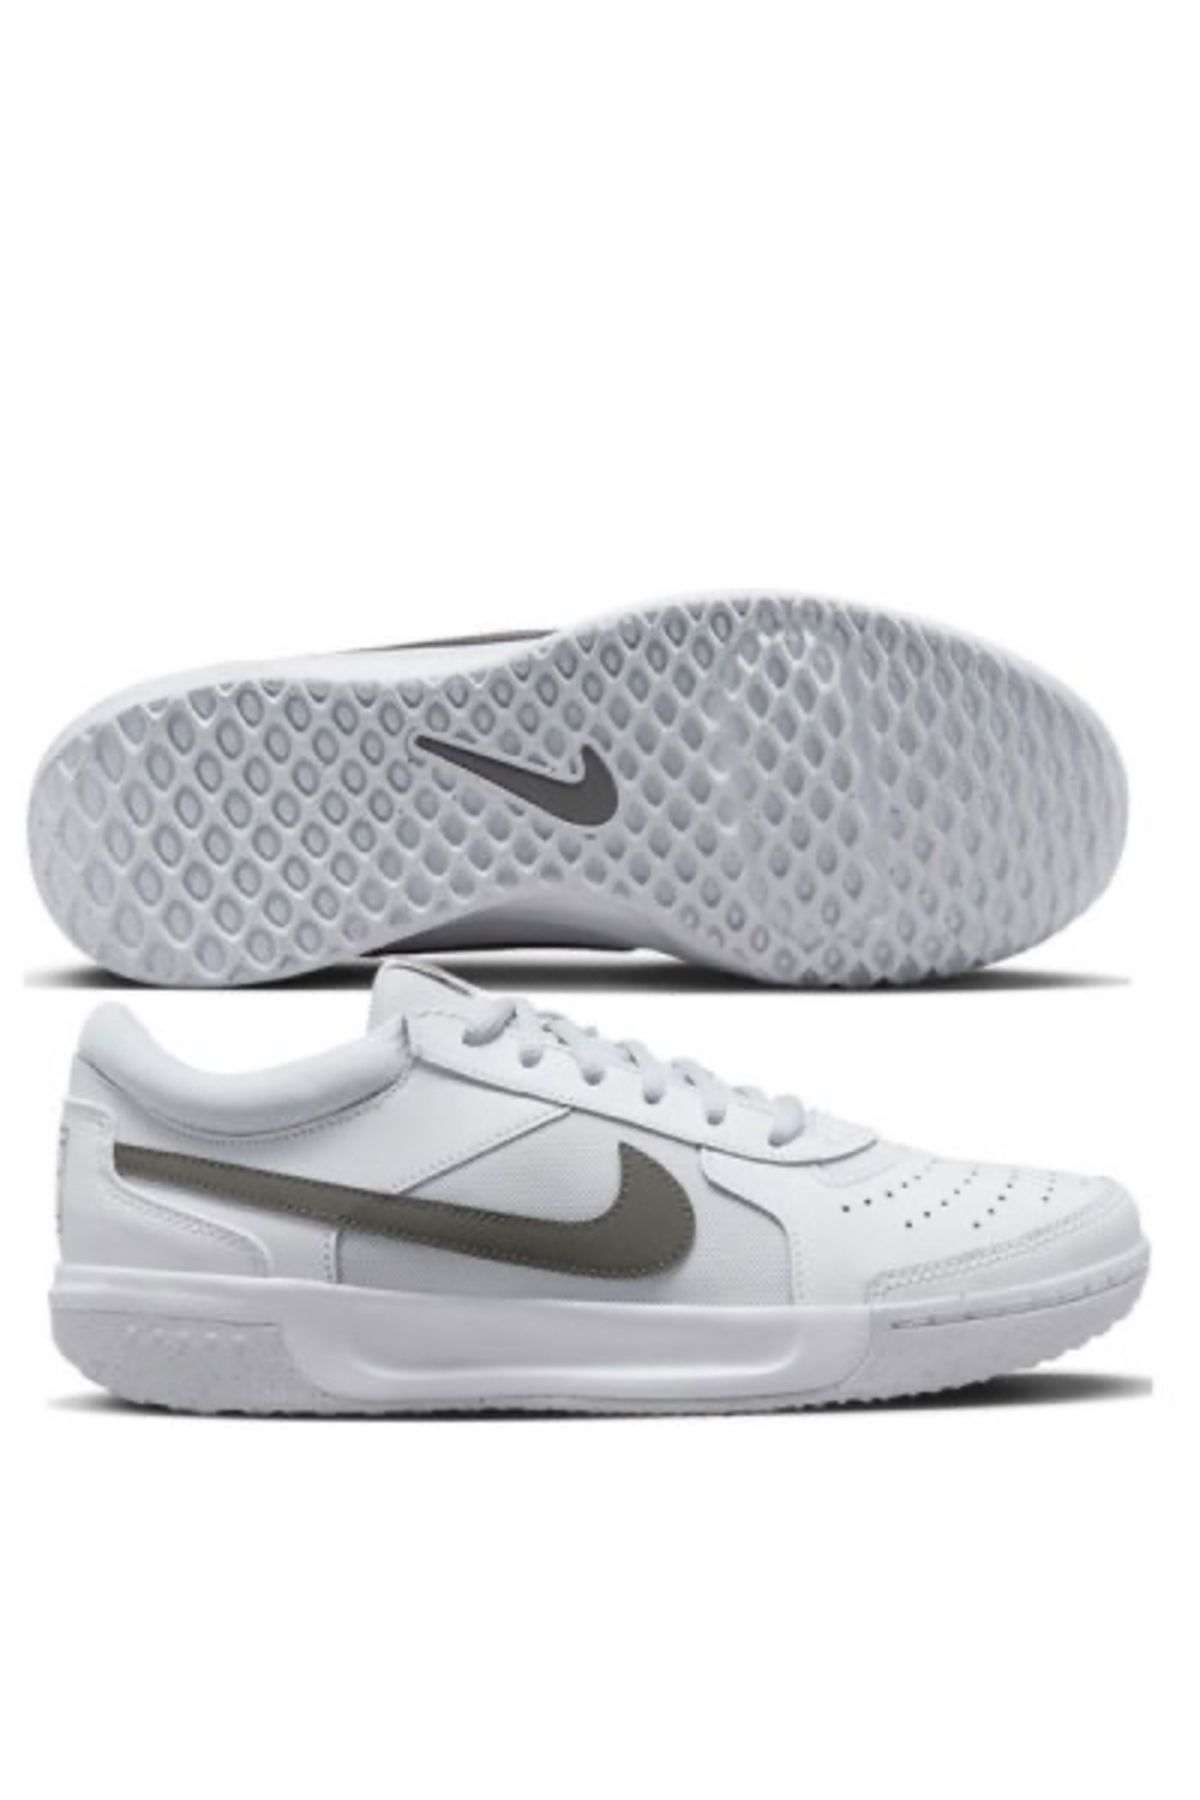 Nike Air Zoom Lite 3 Beyaz Spor Ayakkabı DV3279-100